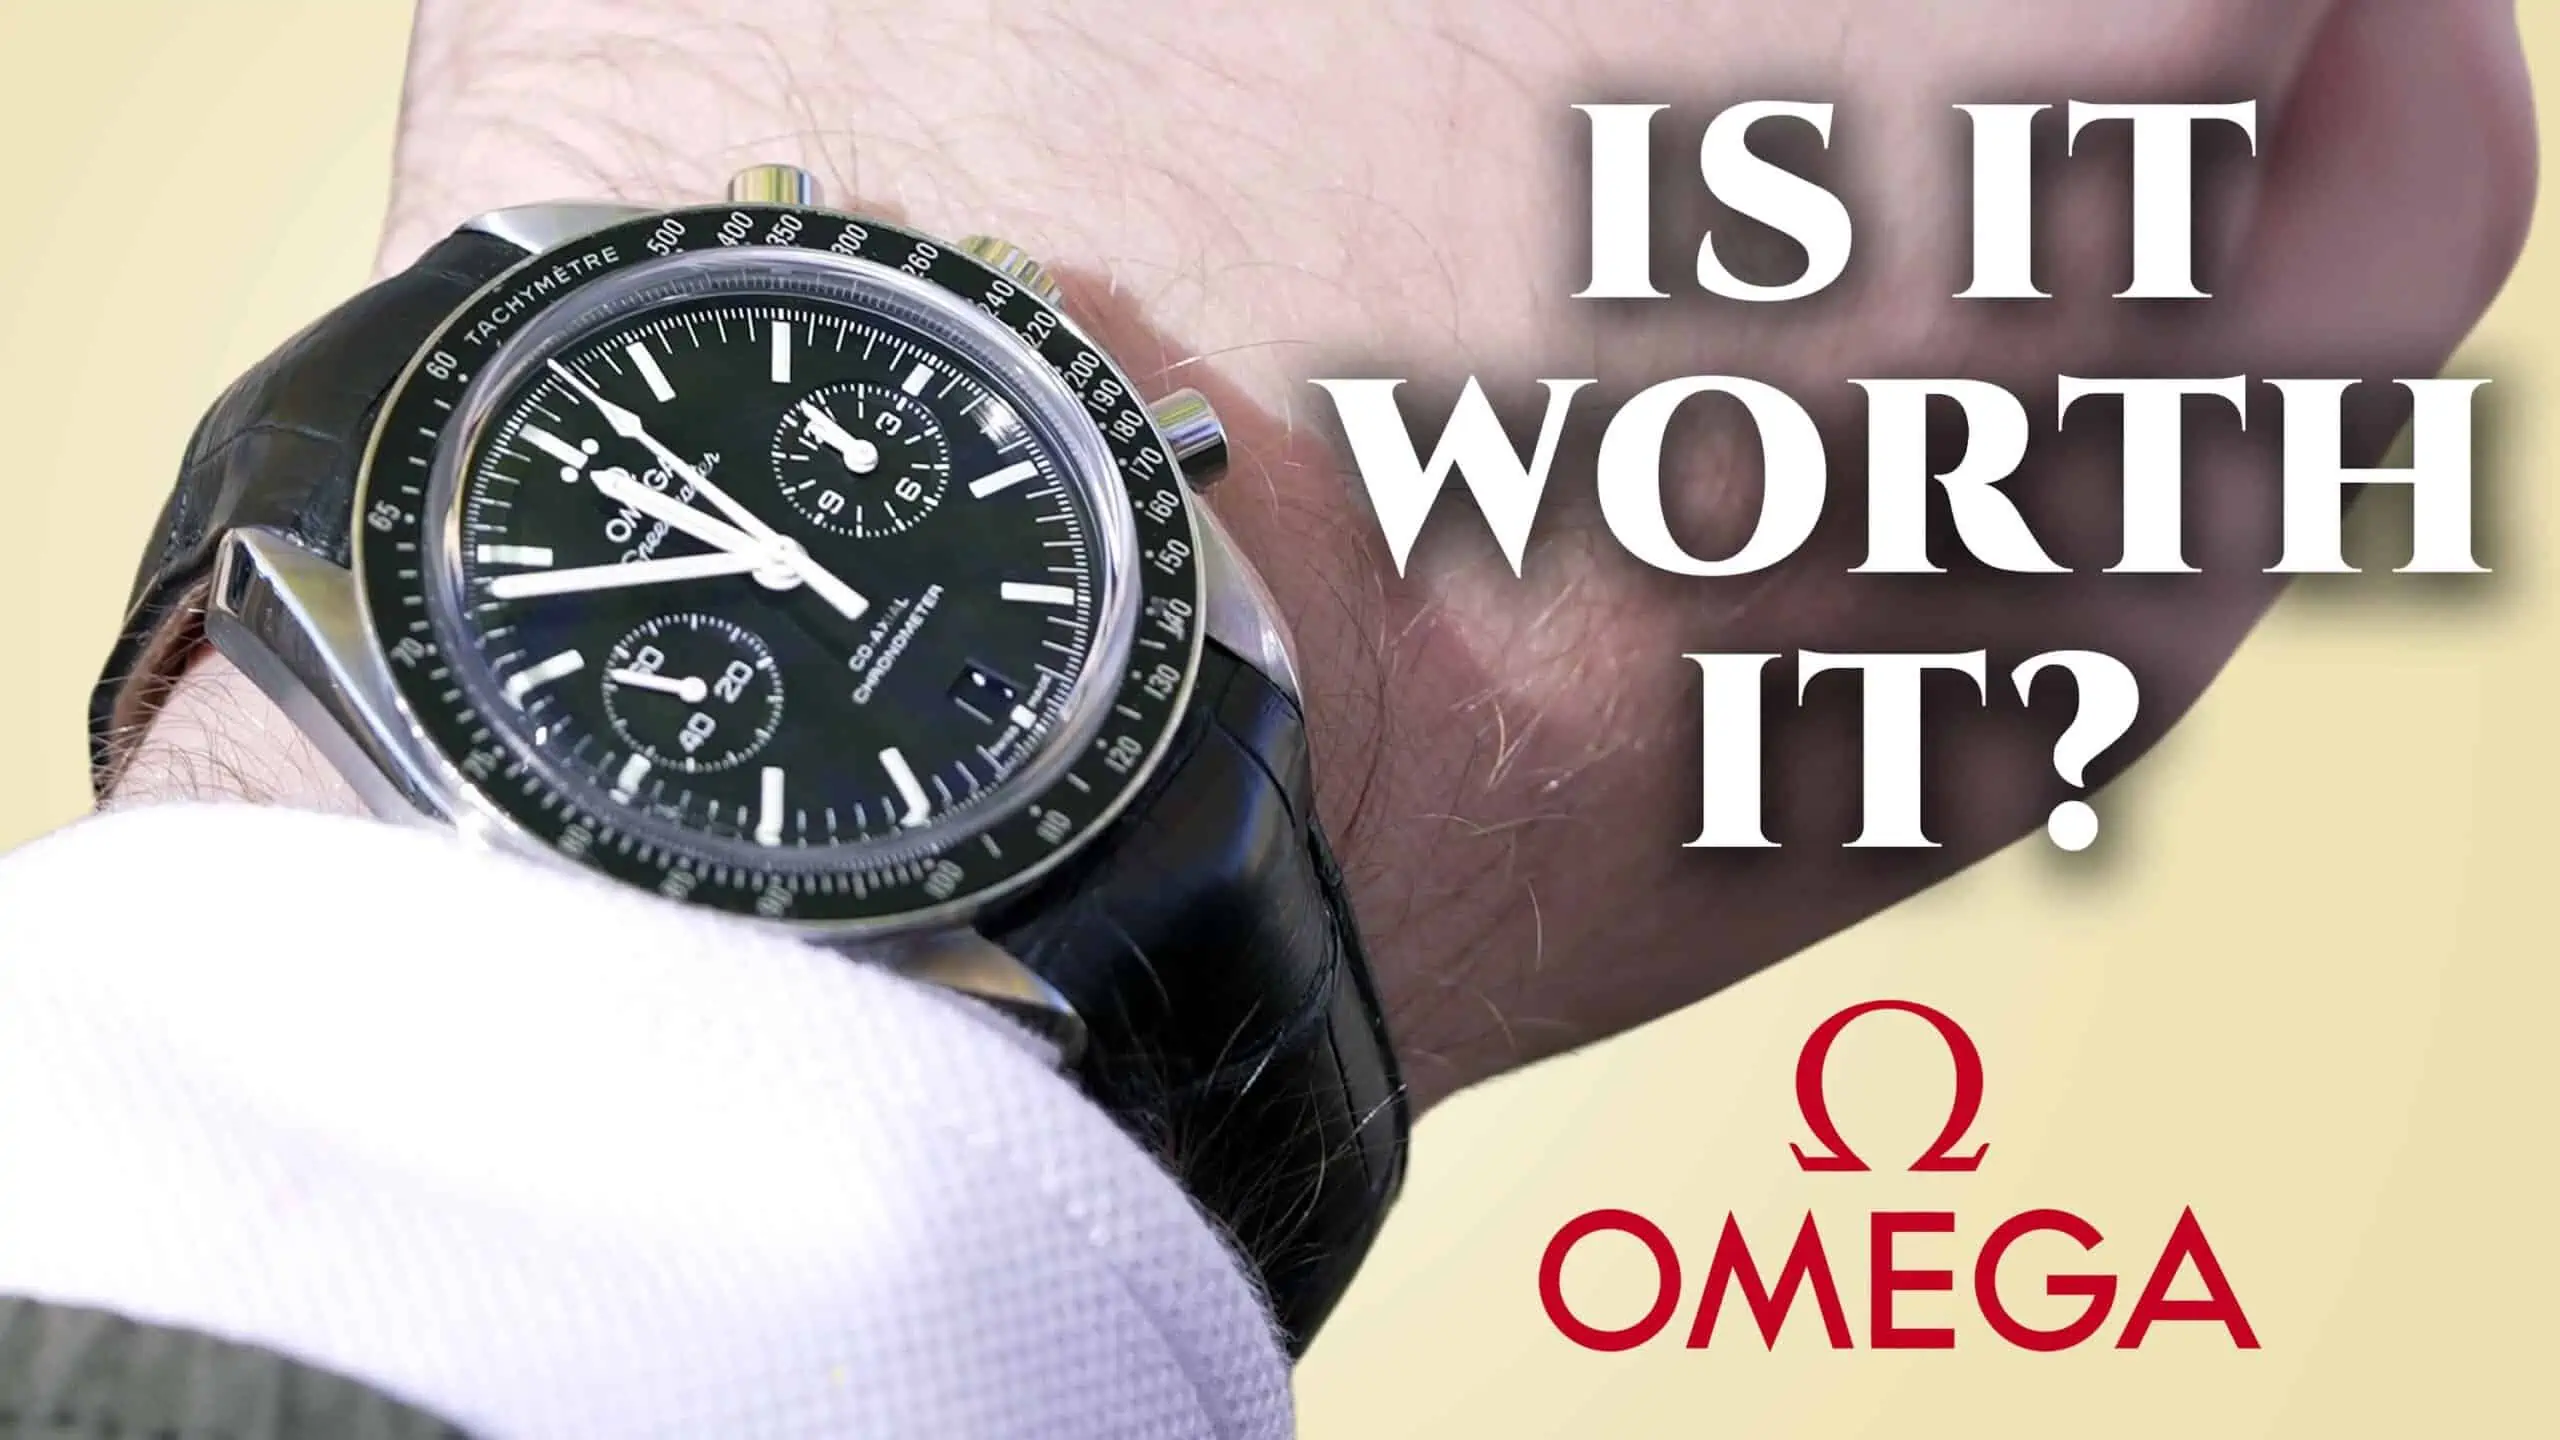 Omega Speedmaster Professional Moonwatch Apollo 11 Review